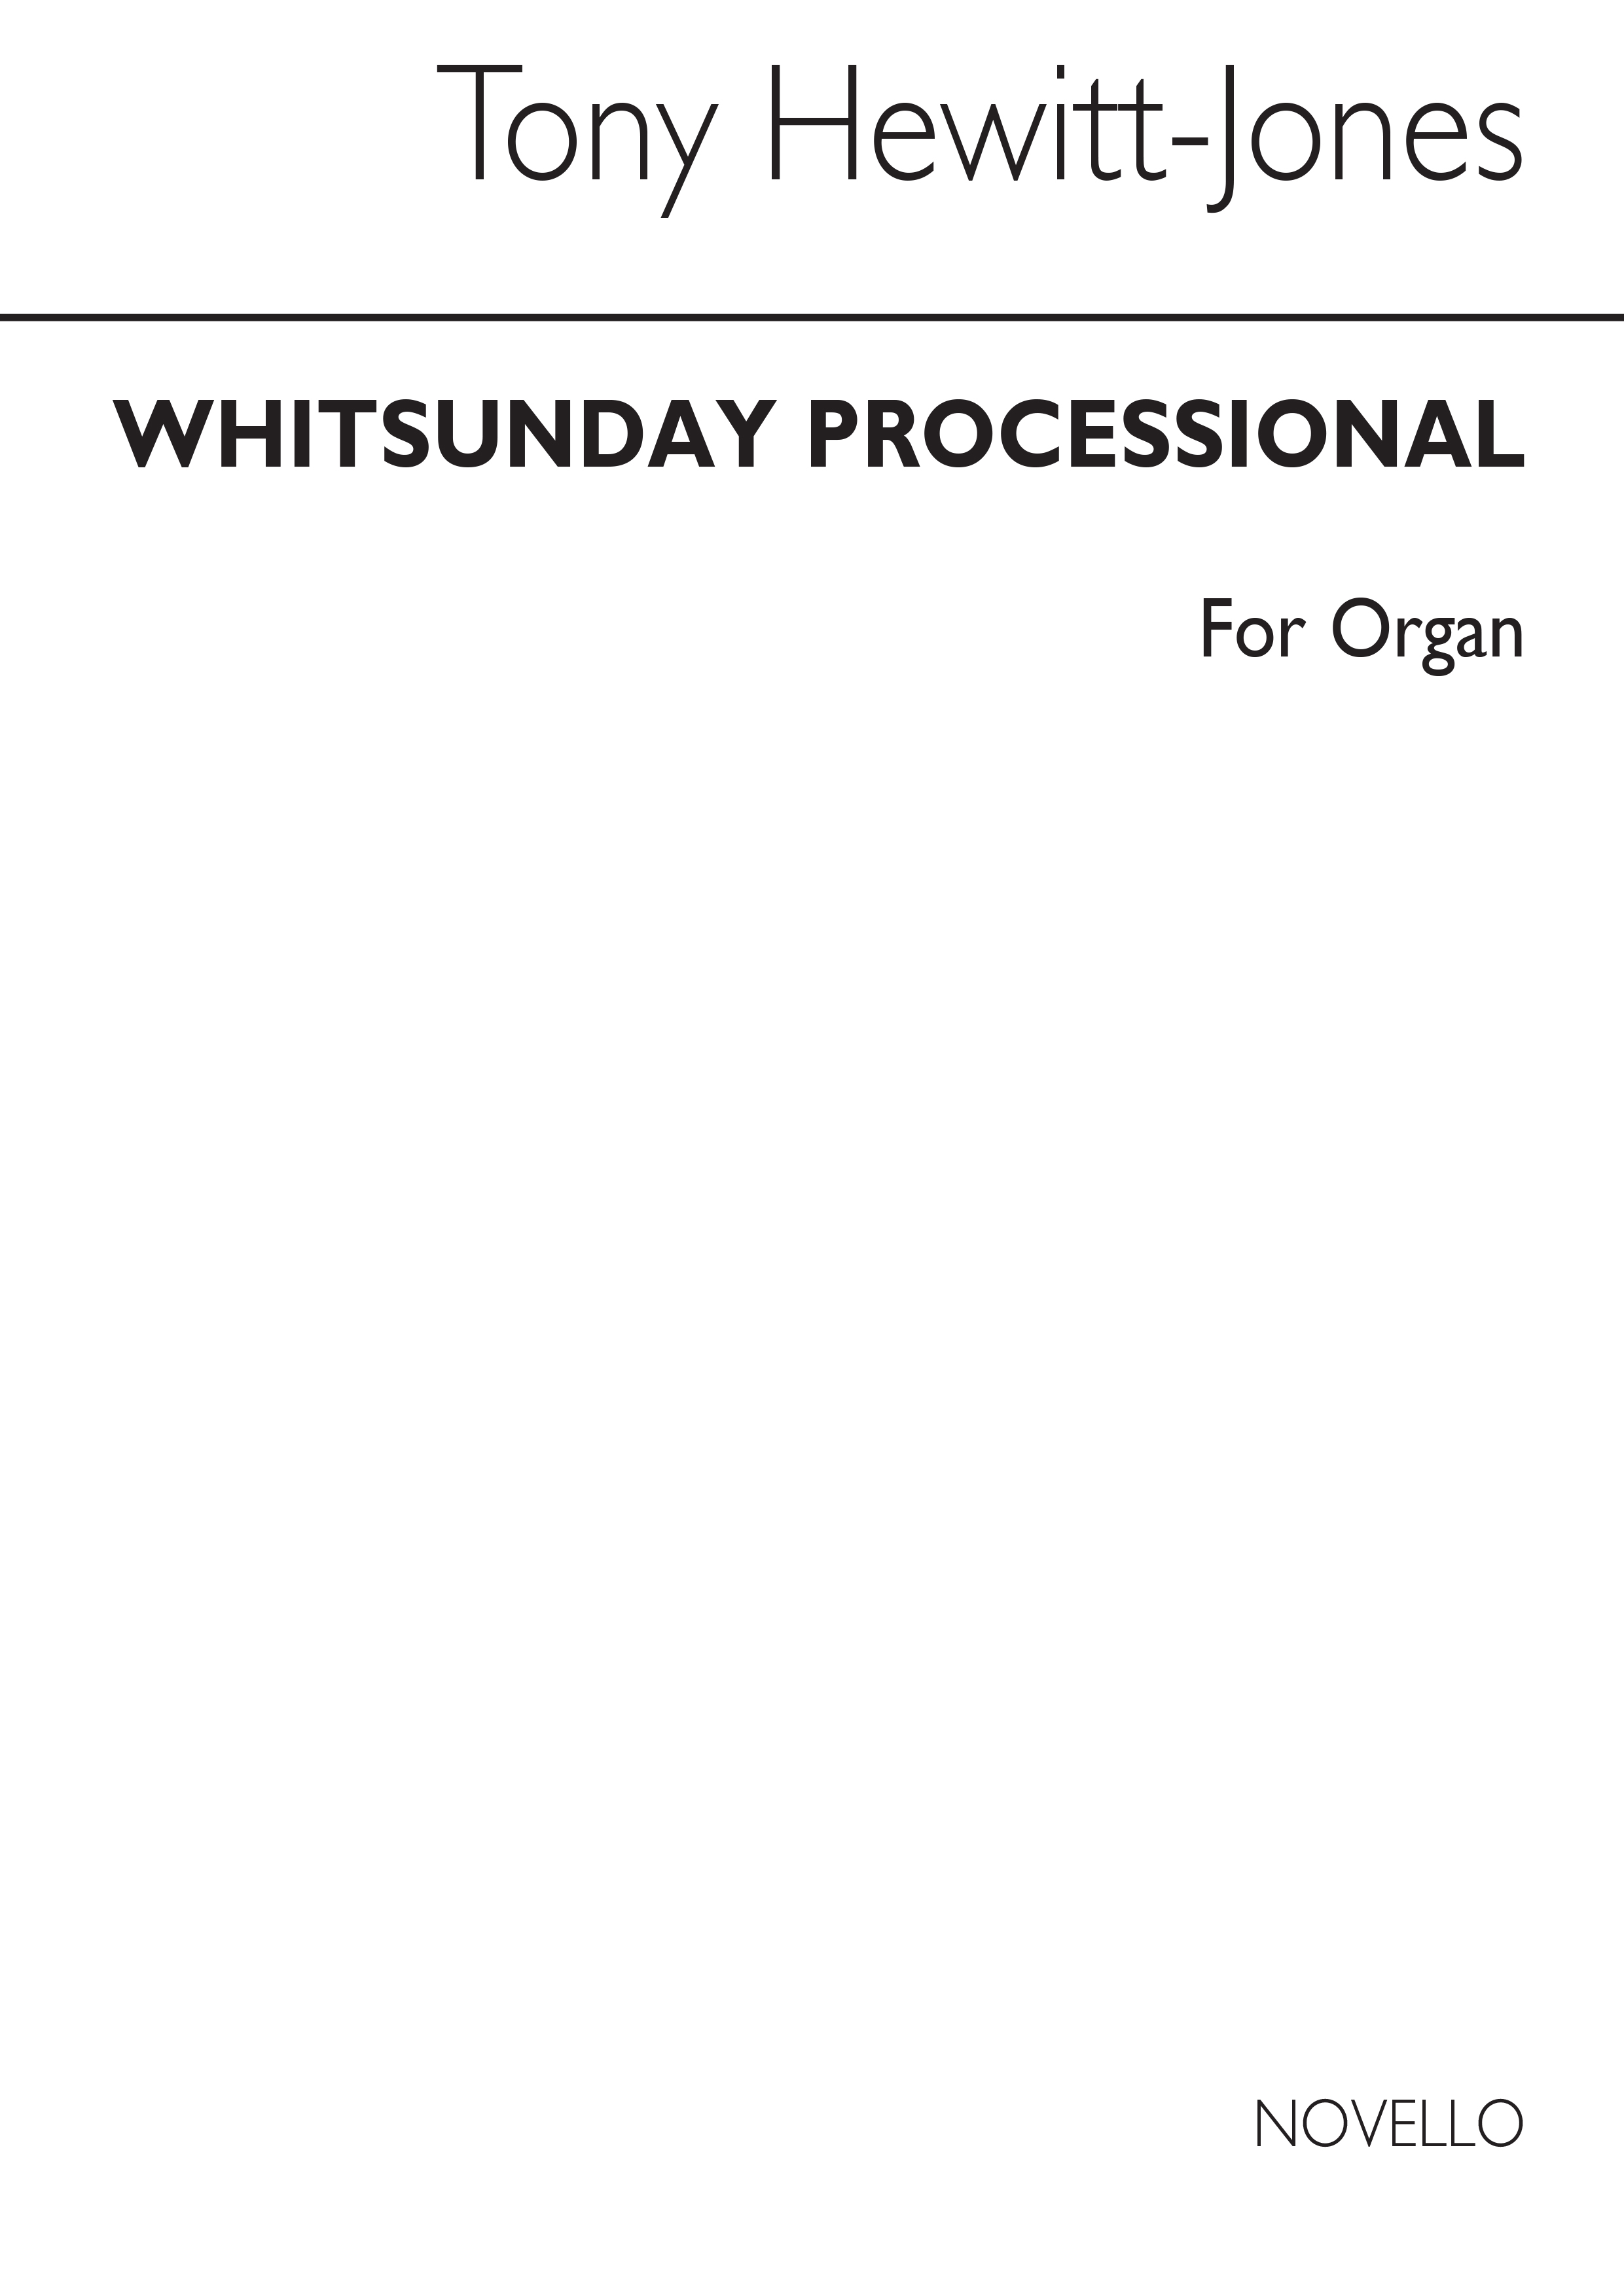 Tony Hewitt-Jones: Whitsunday Processional For Organ